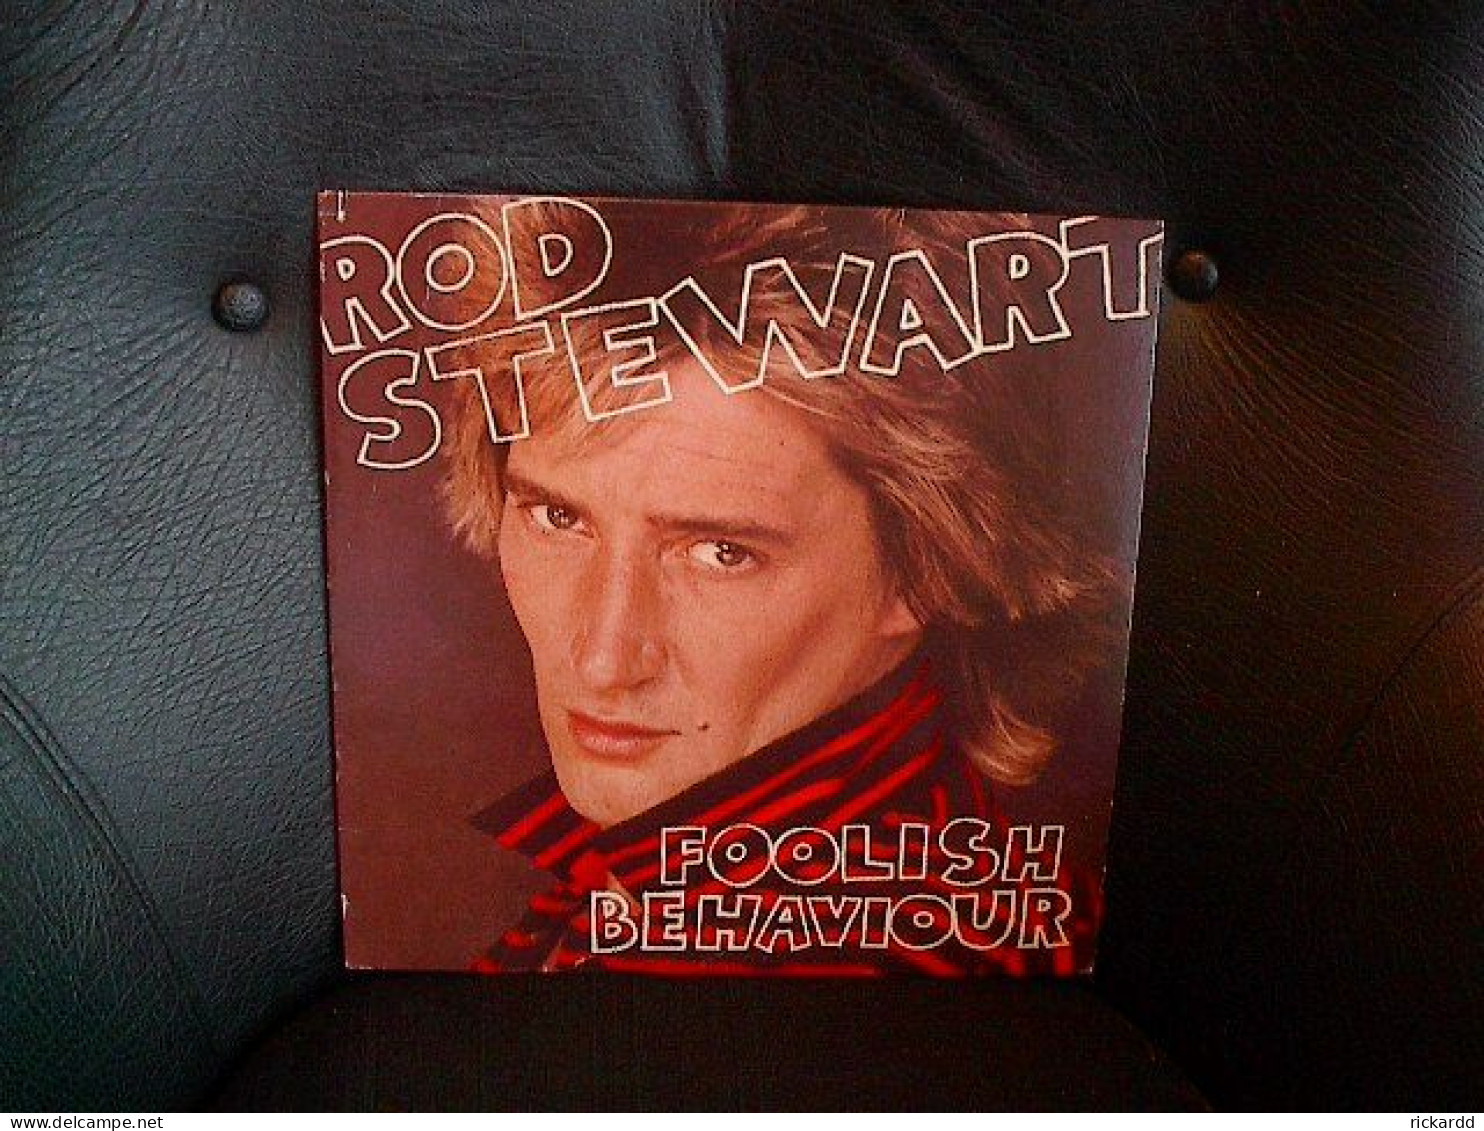 Rod Stewart - Foolish Behaviour (LP) - Rock